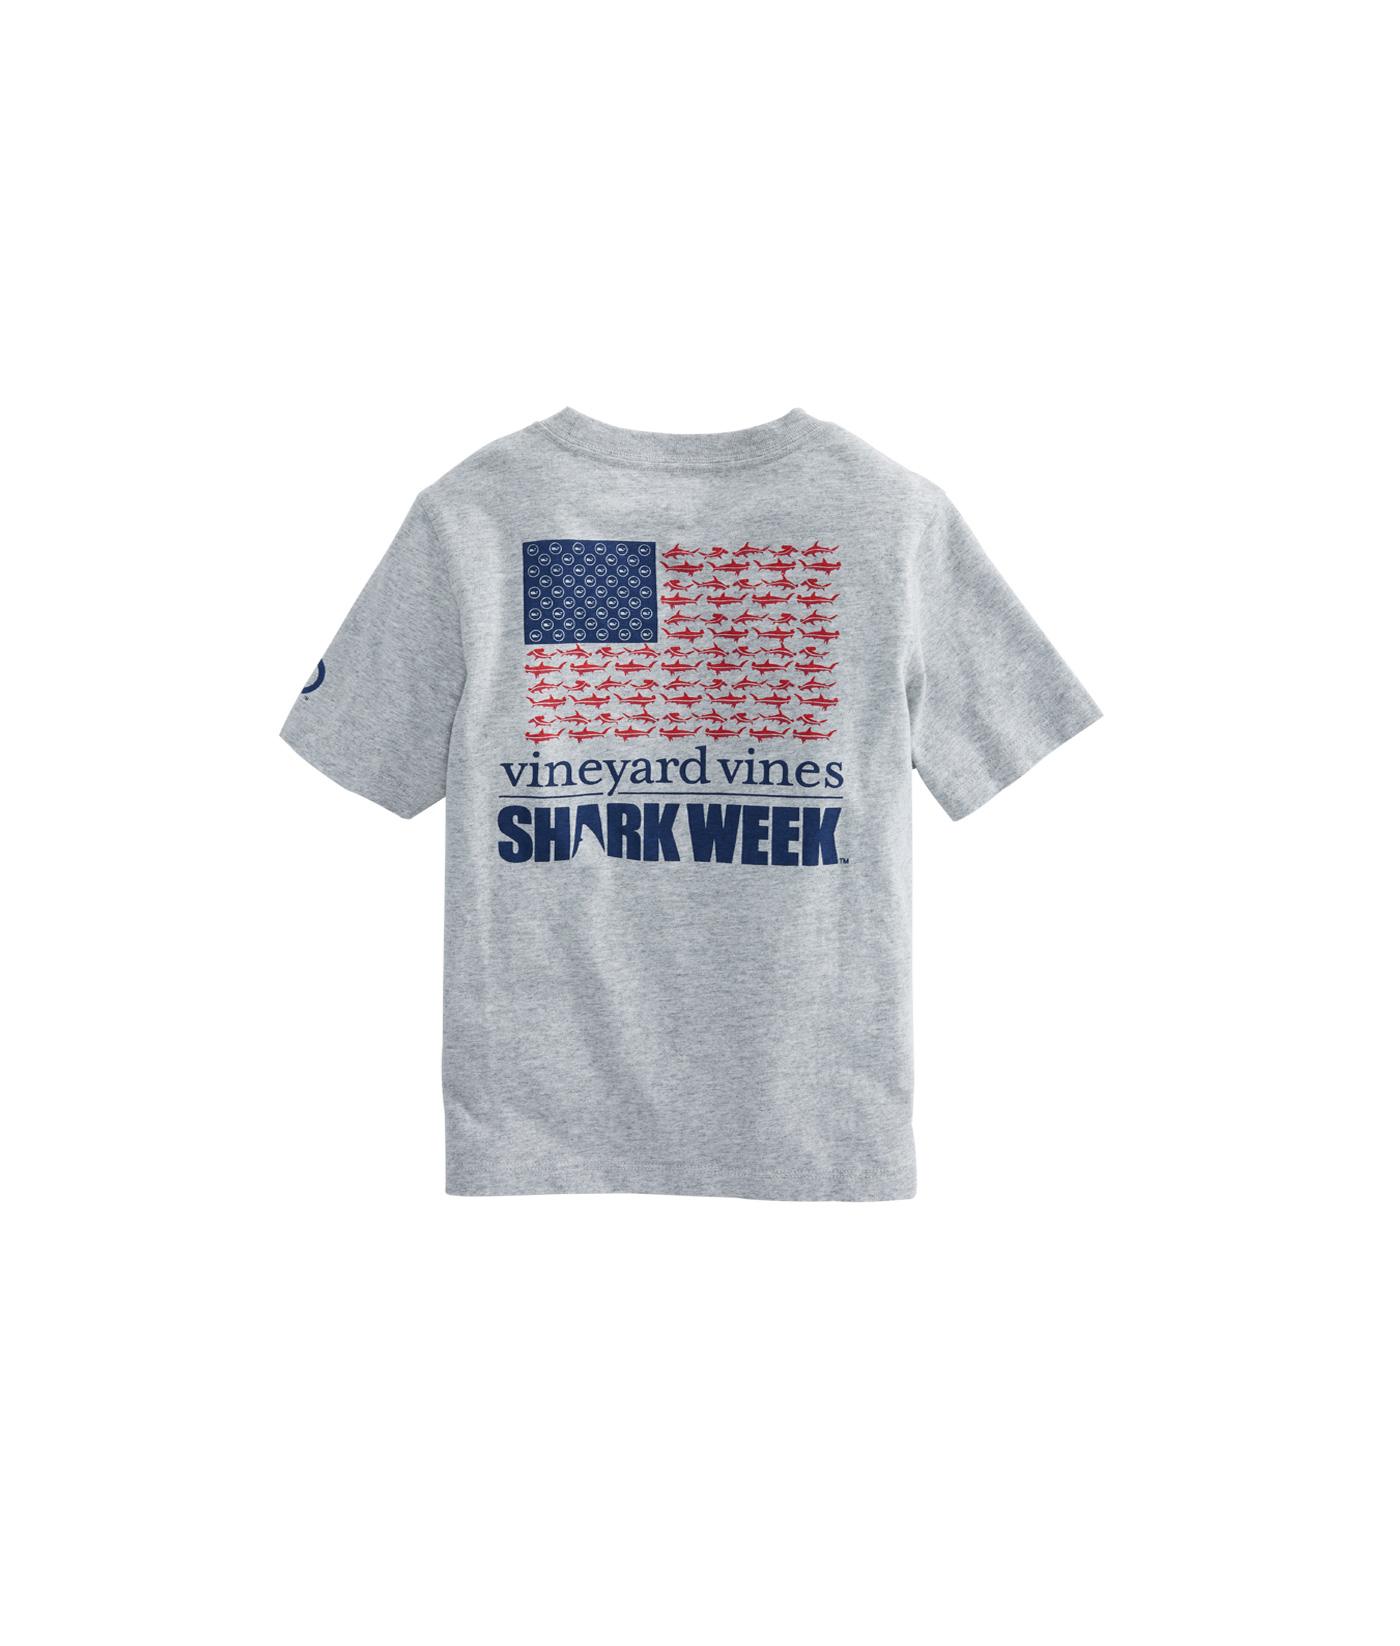 Shop Kids Shark Week Sharks & Stripes T-Shirt at vineyard vines